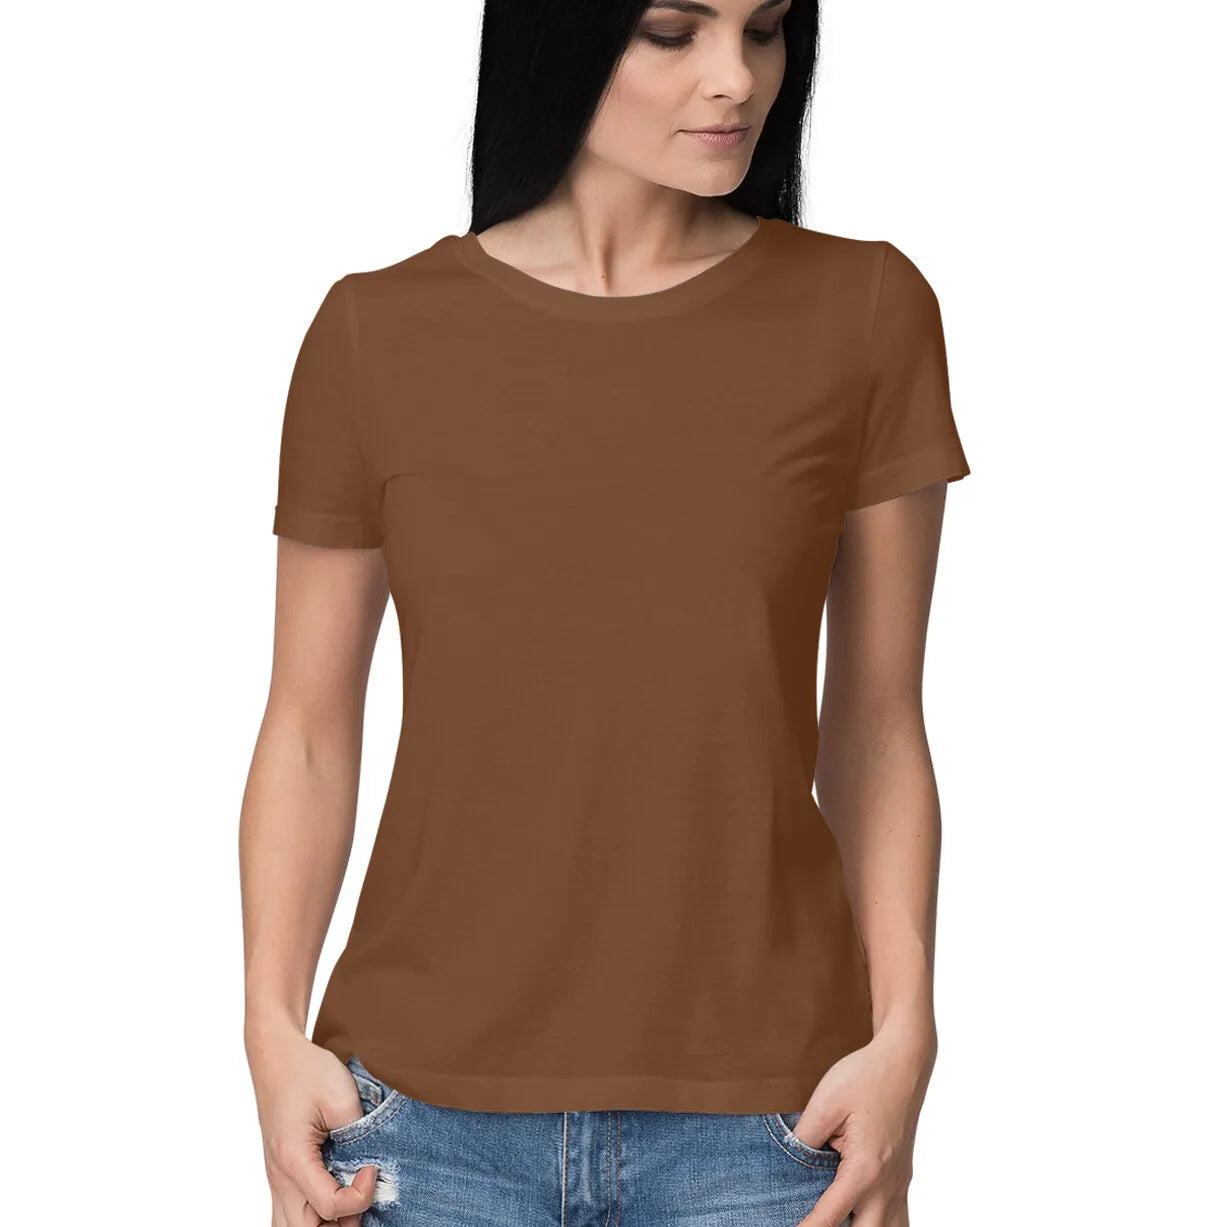 BILLIK -  SOLID Coffee Brown Unisex T-Shirt